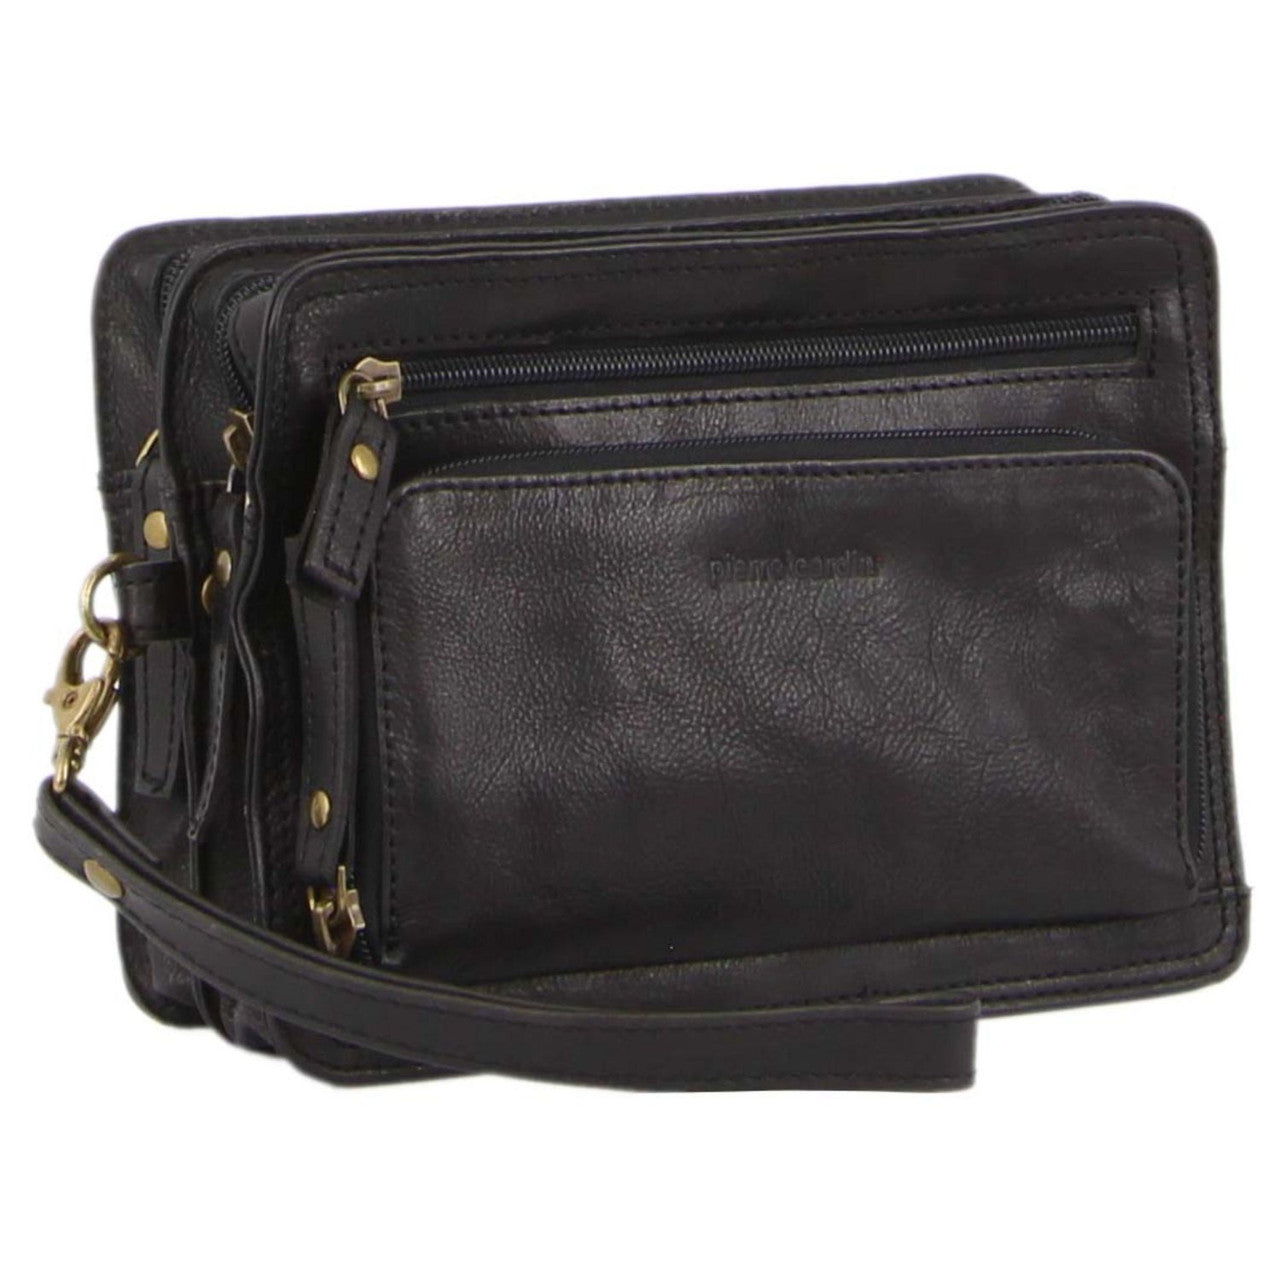 Pierre Cardin Rustic Leather Multi-compartment Organizer Bag